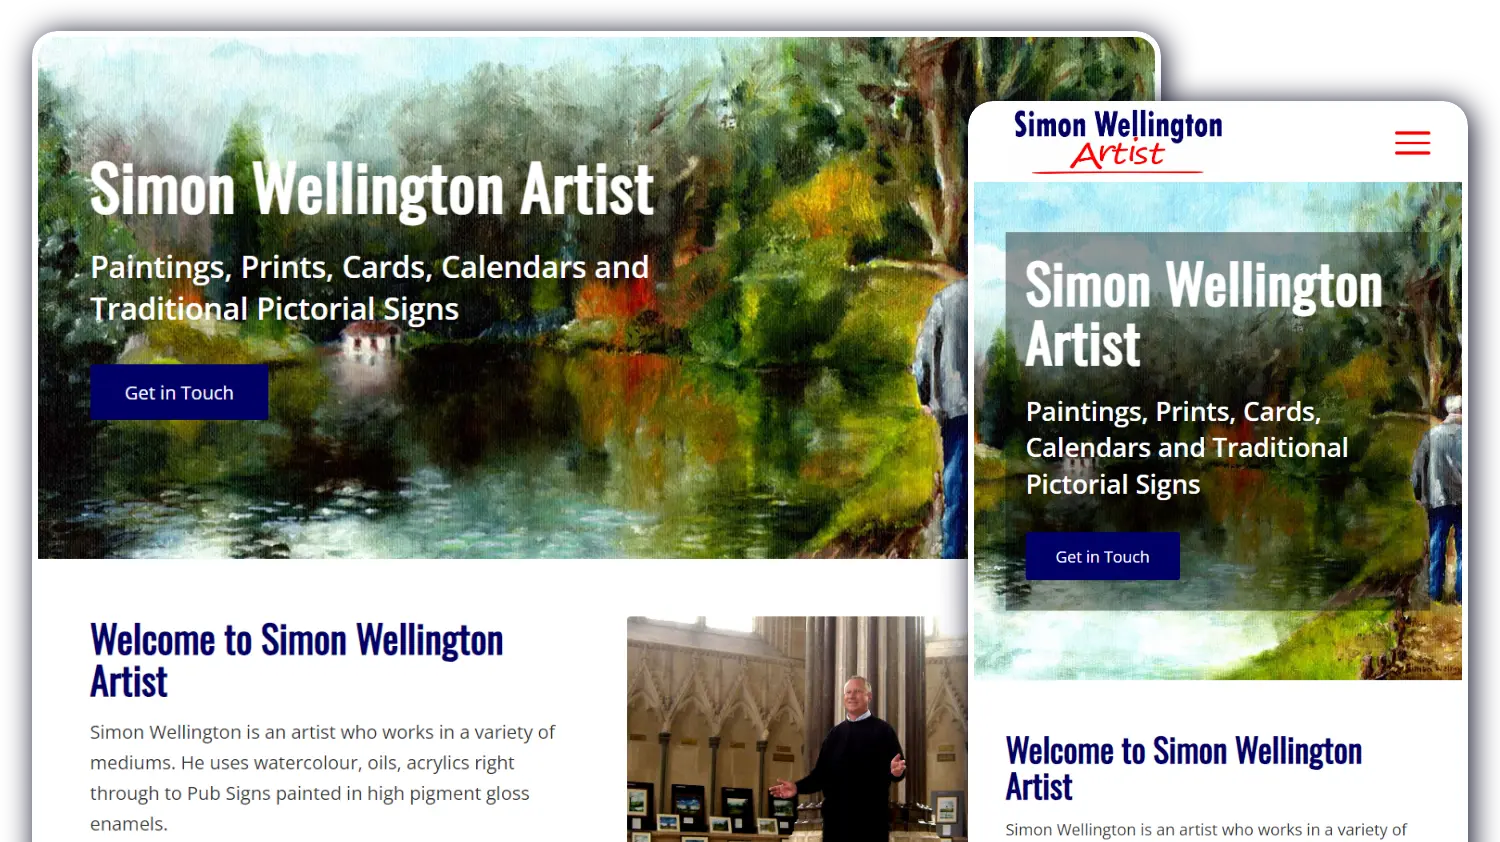 Simon Wellington Artist - Website by Blaze